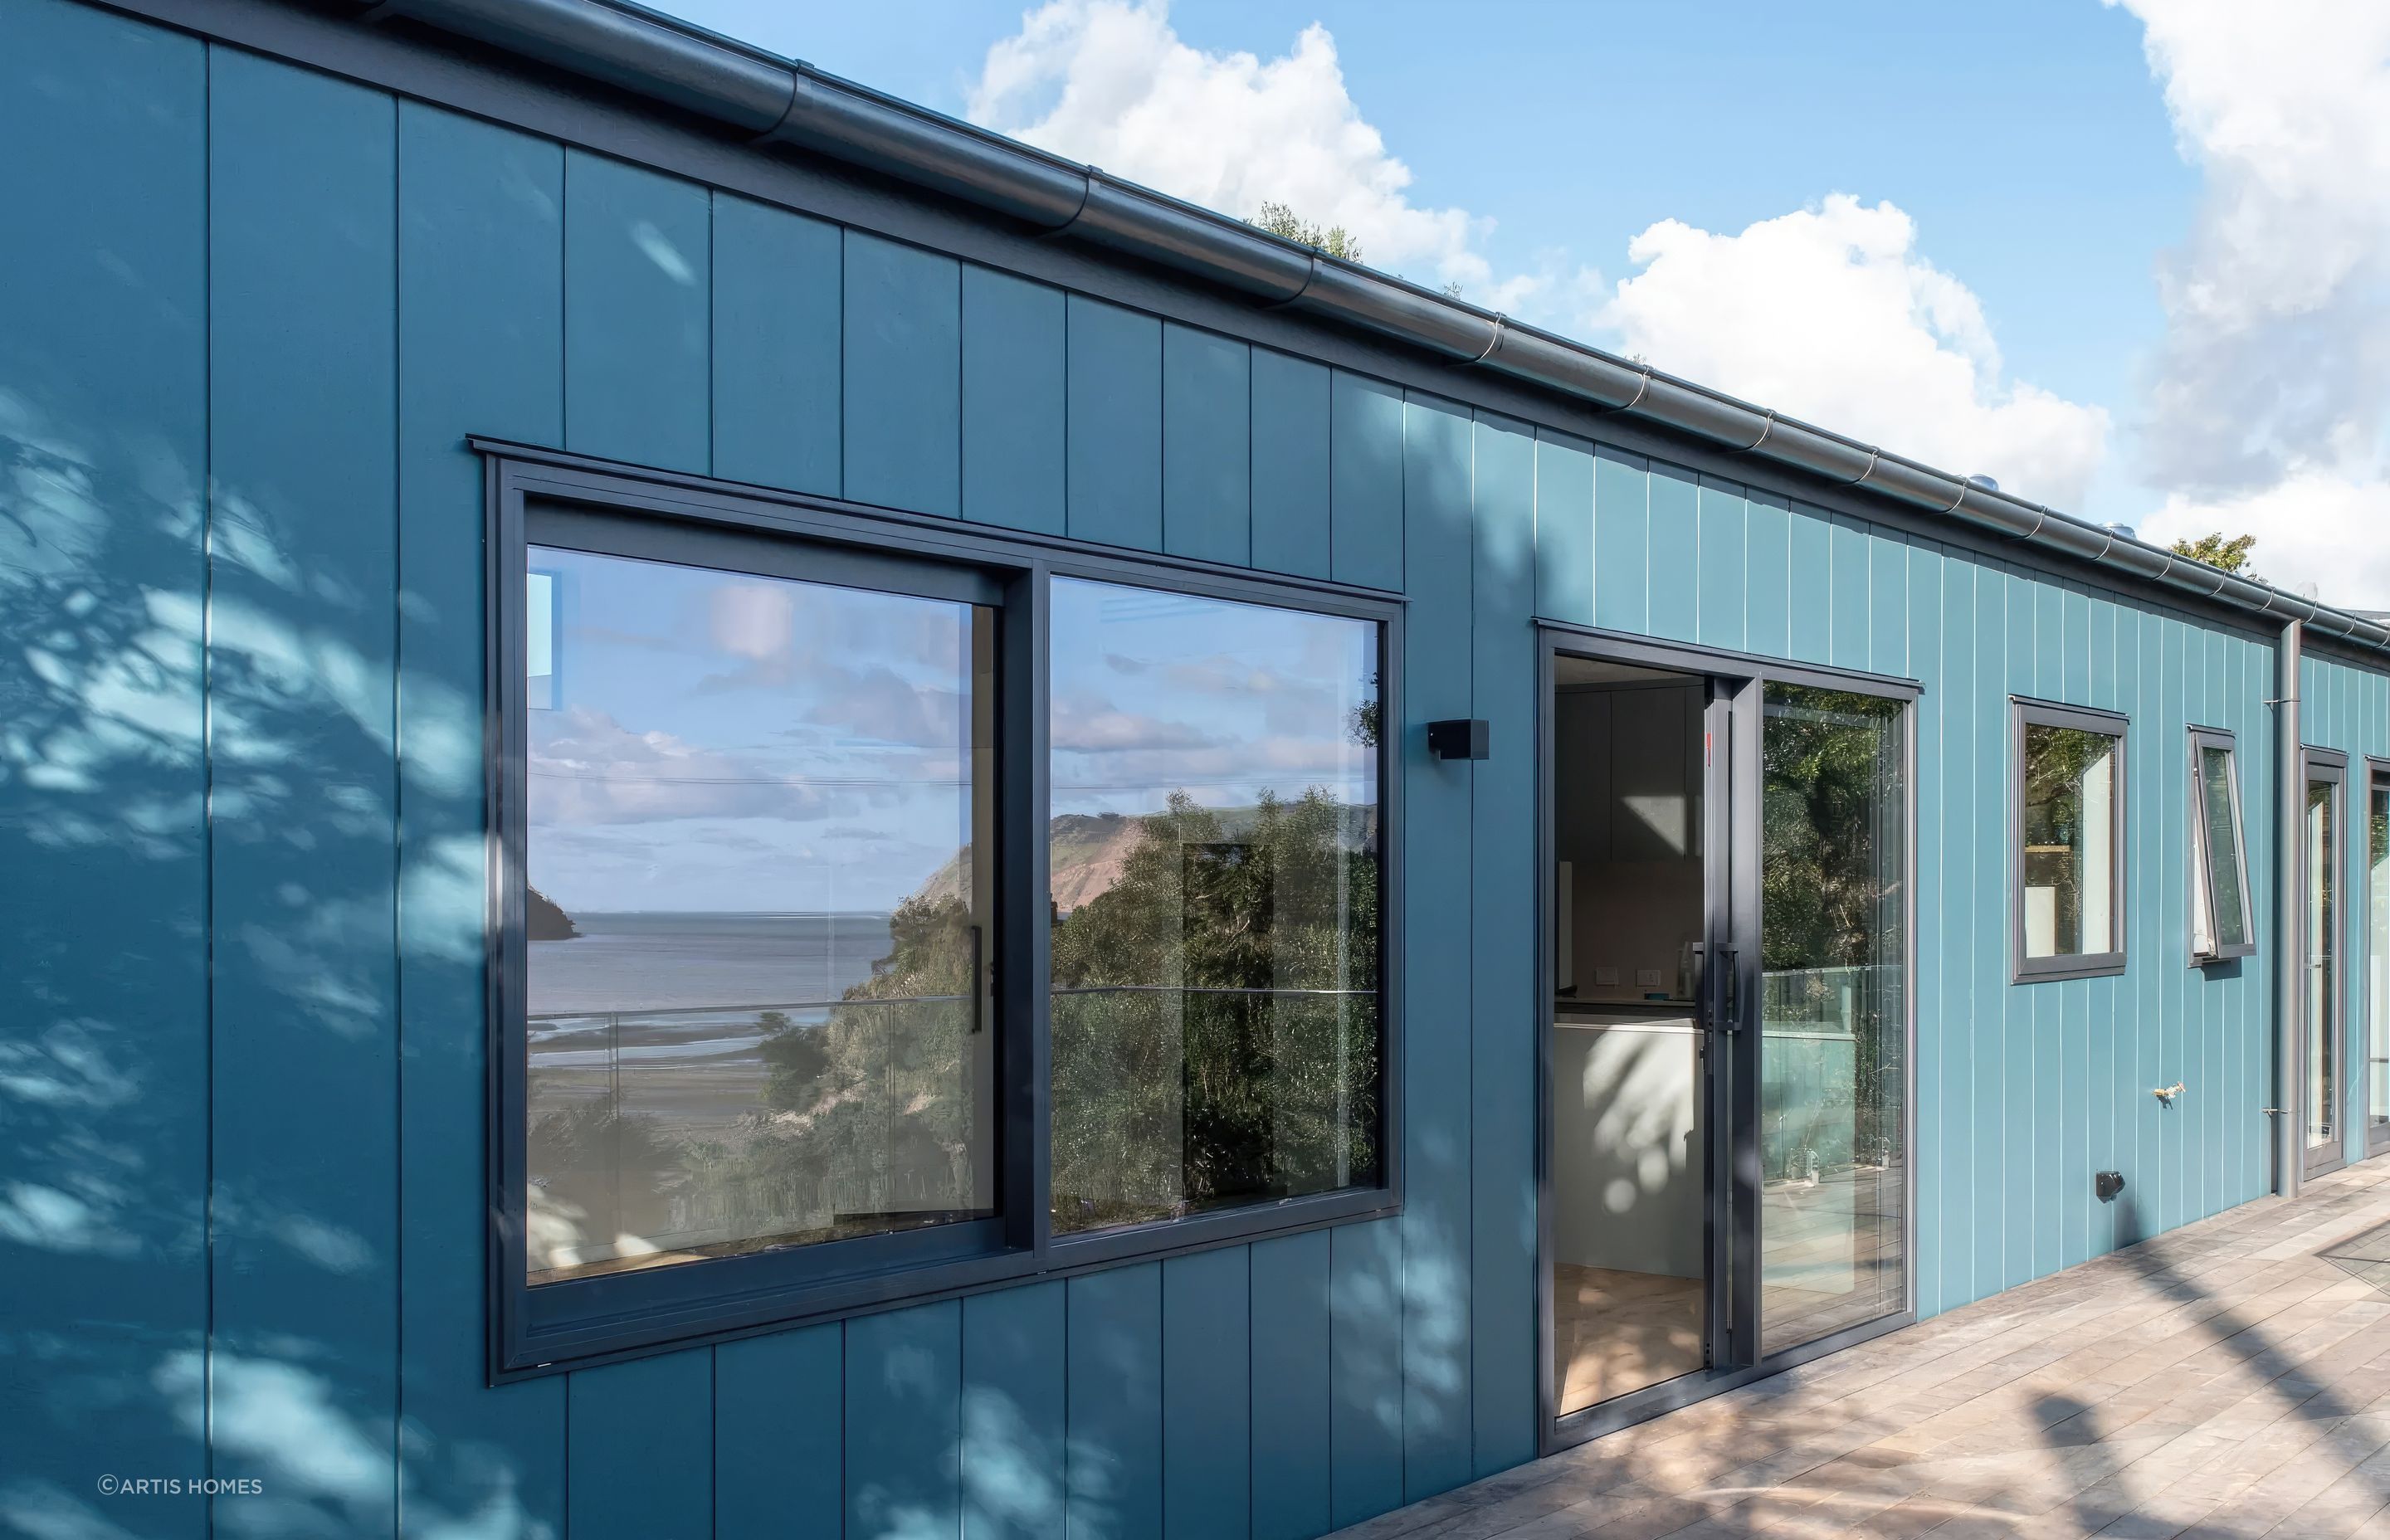 huia-cladding-exterior-artis-home-gigapixel-standard-scale-200x.jpeg